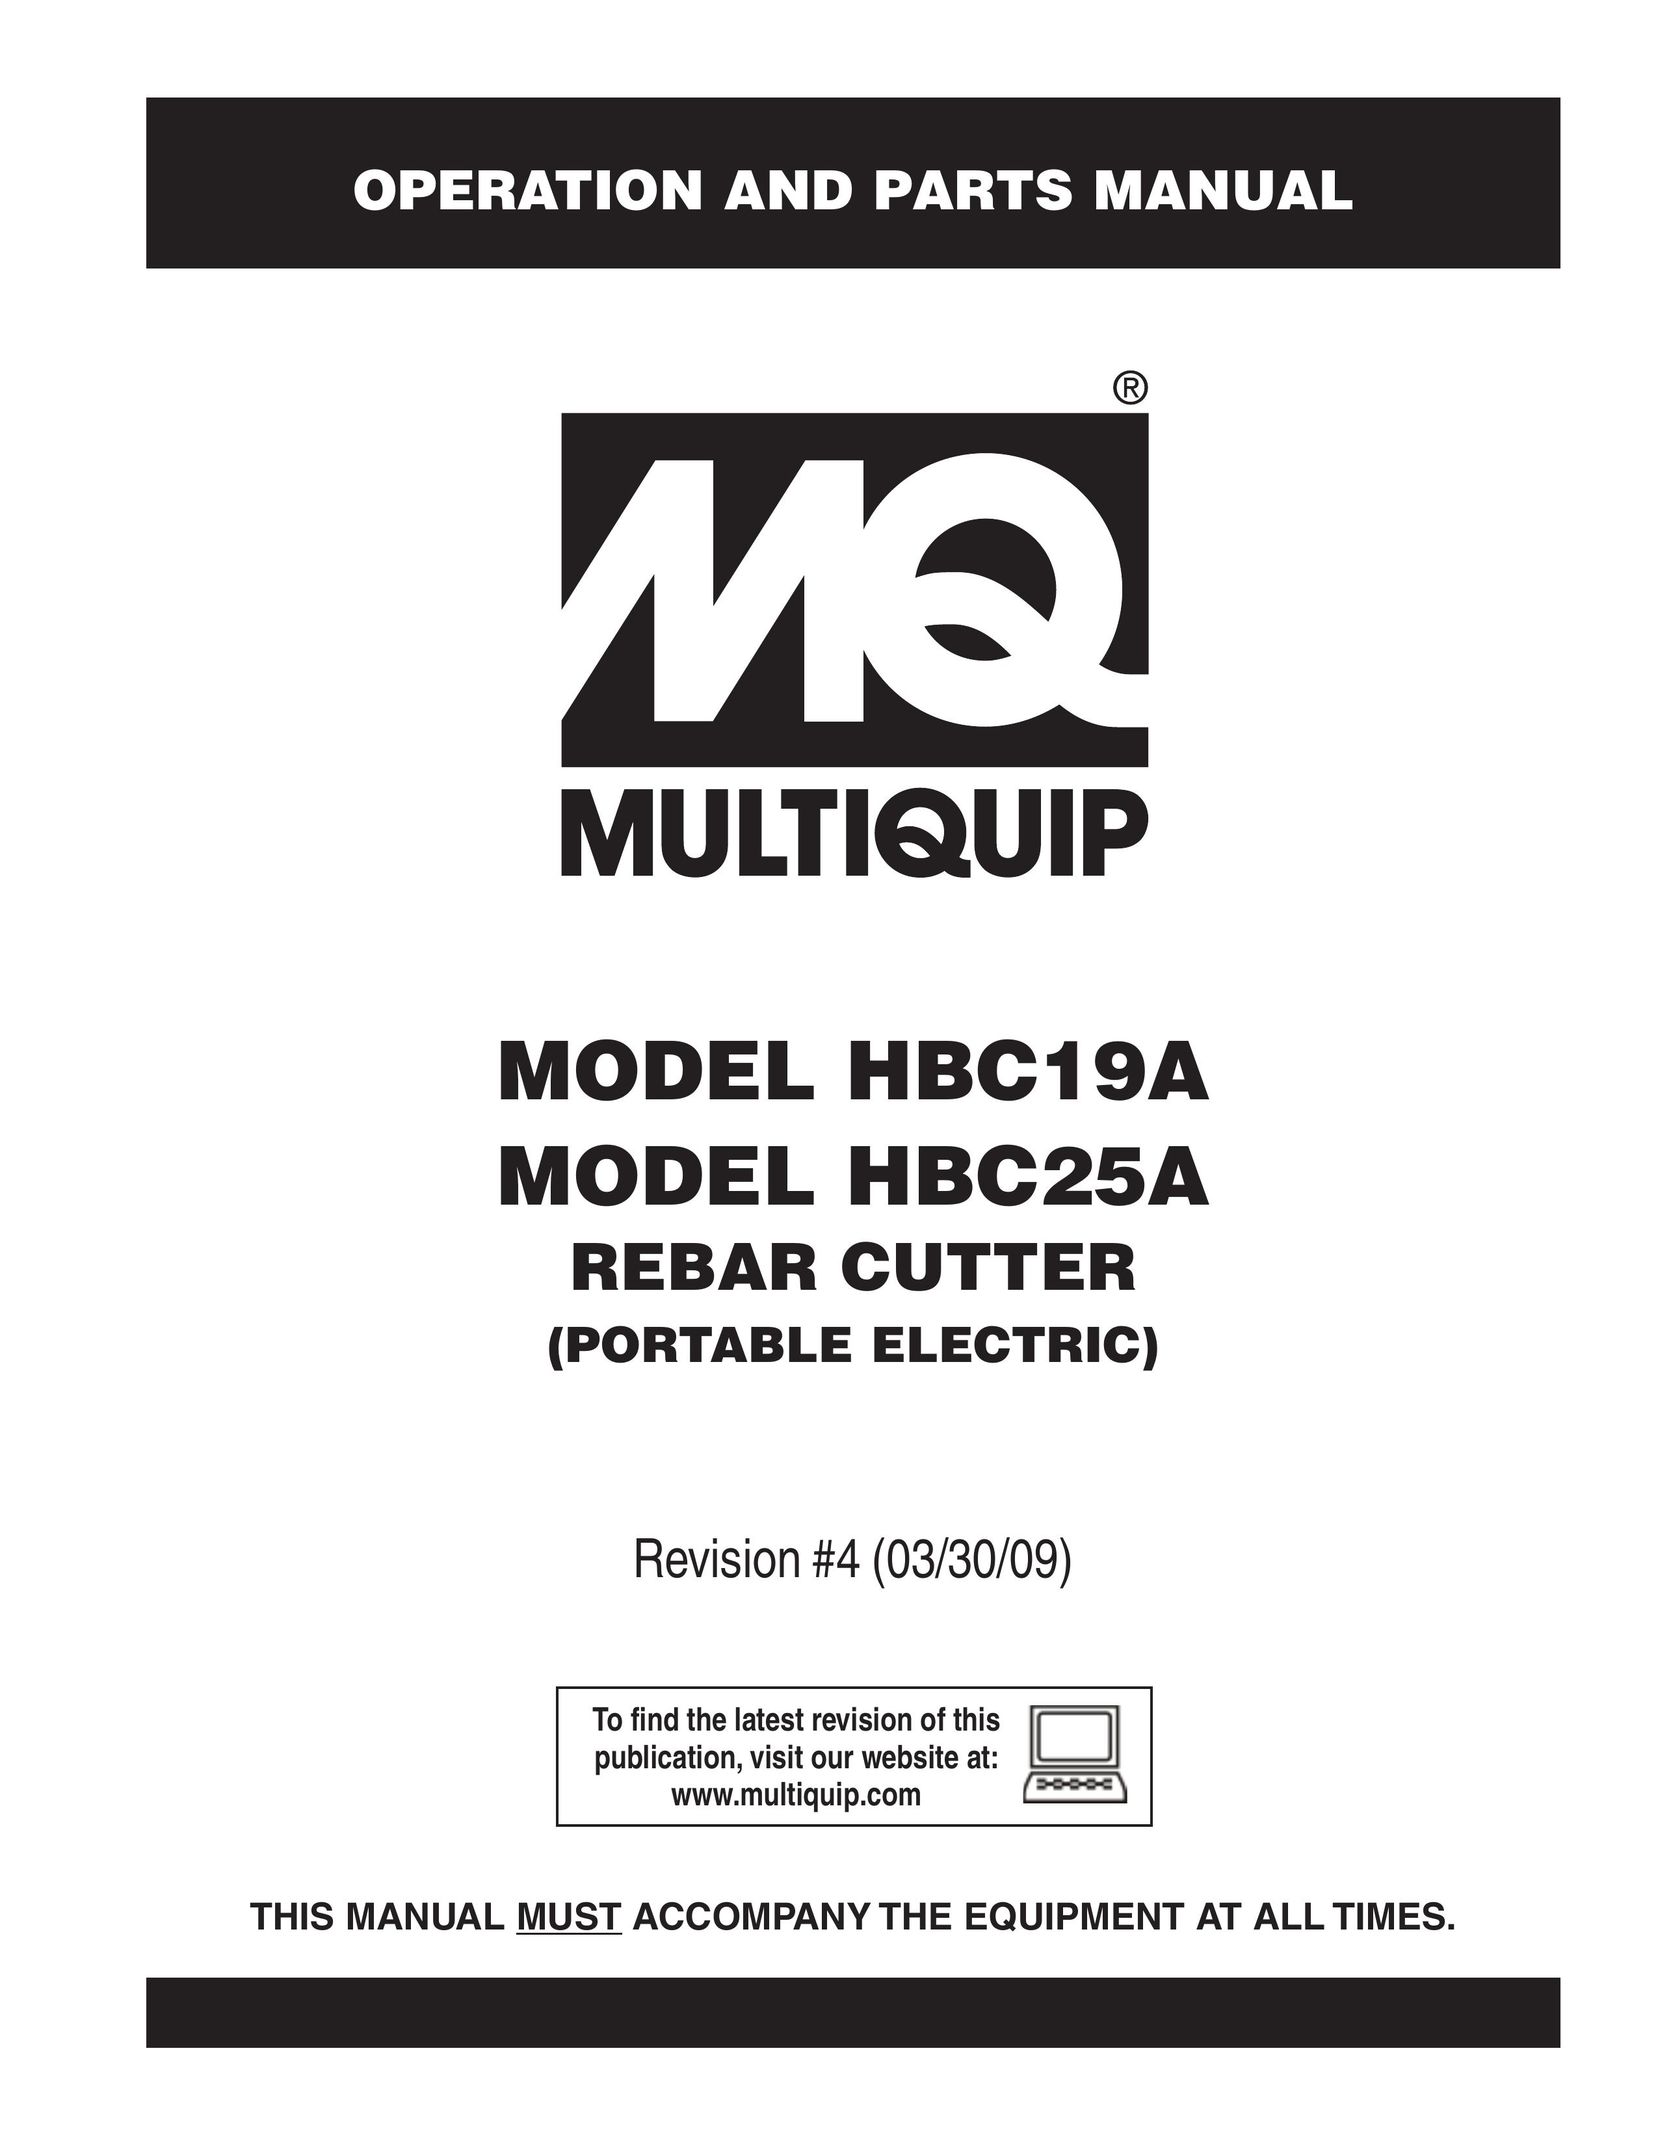 Multiquip HBC19A Doll User Manual